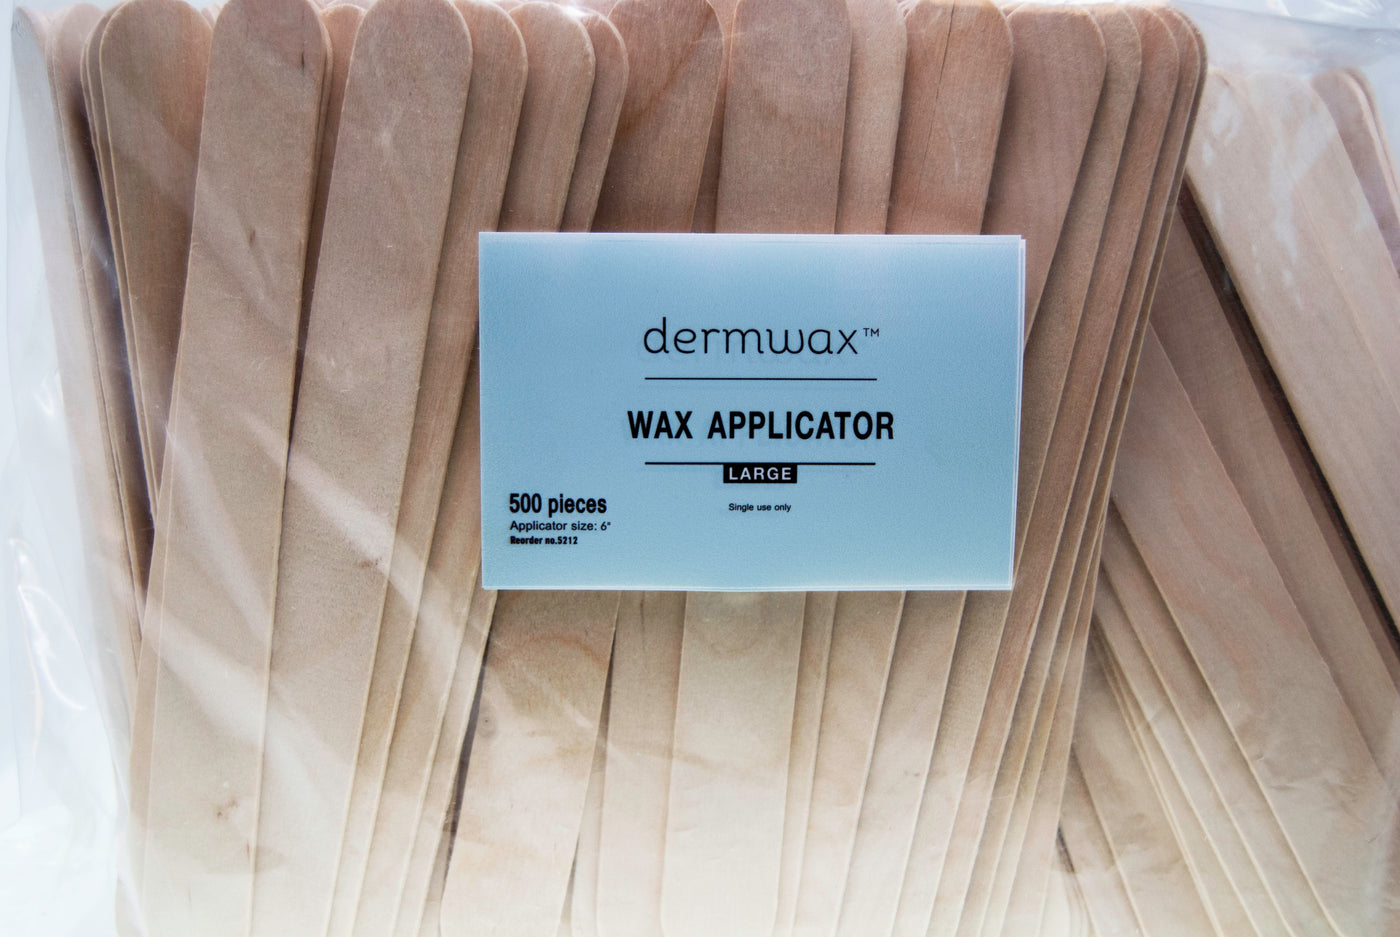 Large Wax Applicator 6" x 3/4", Box of 500